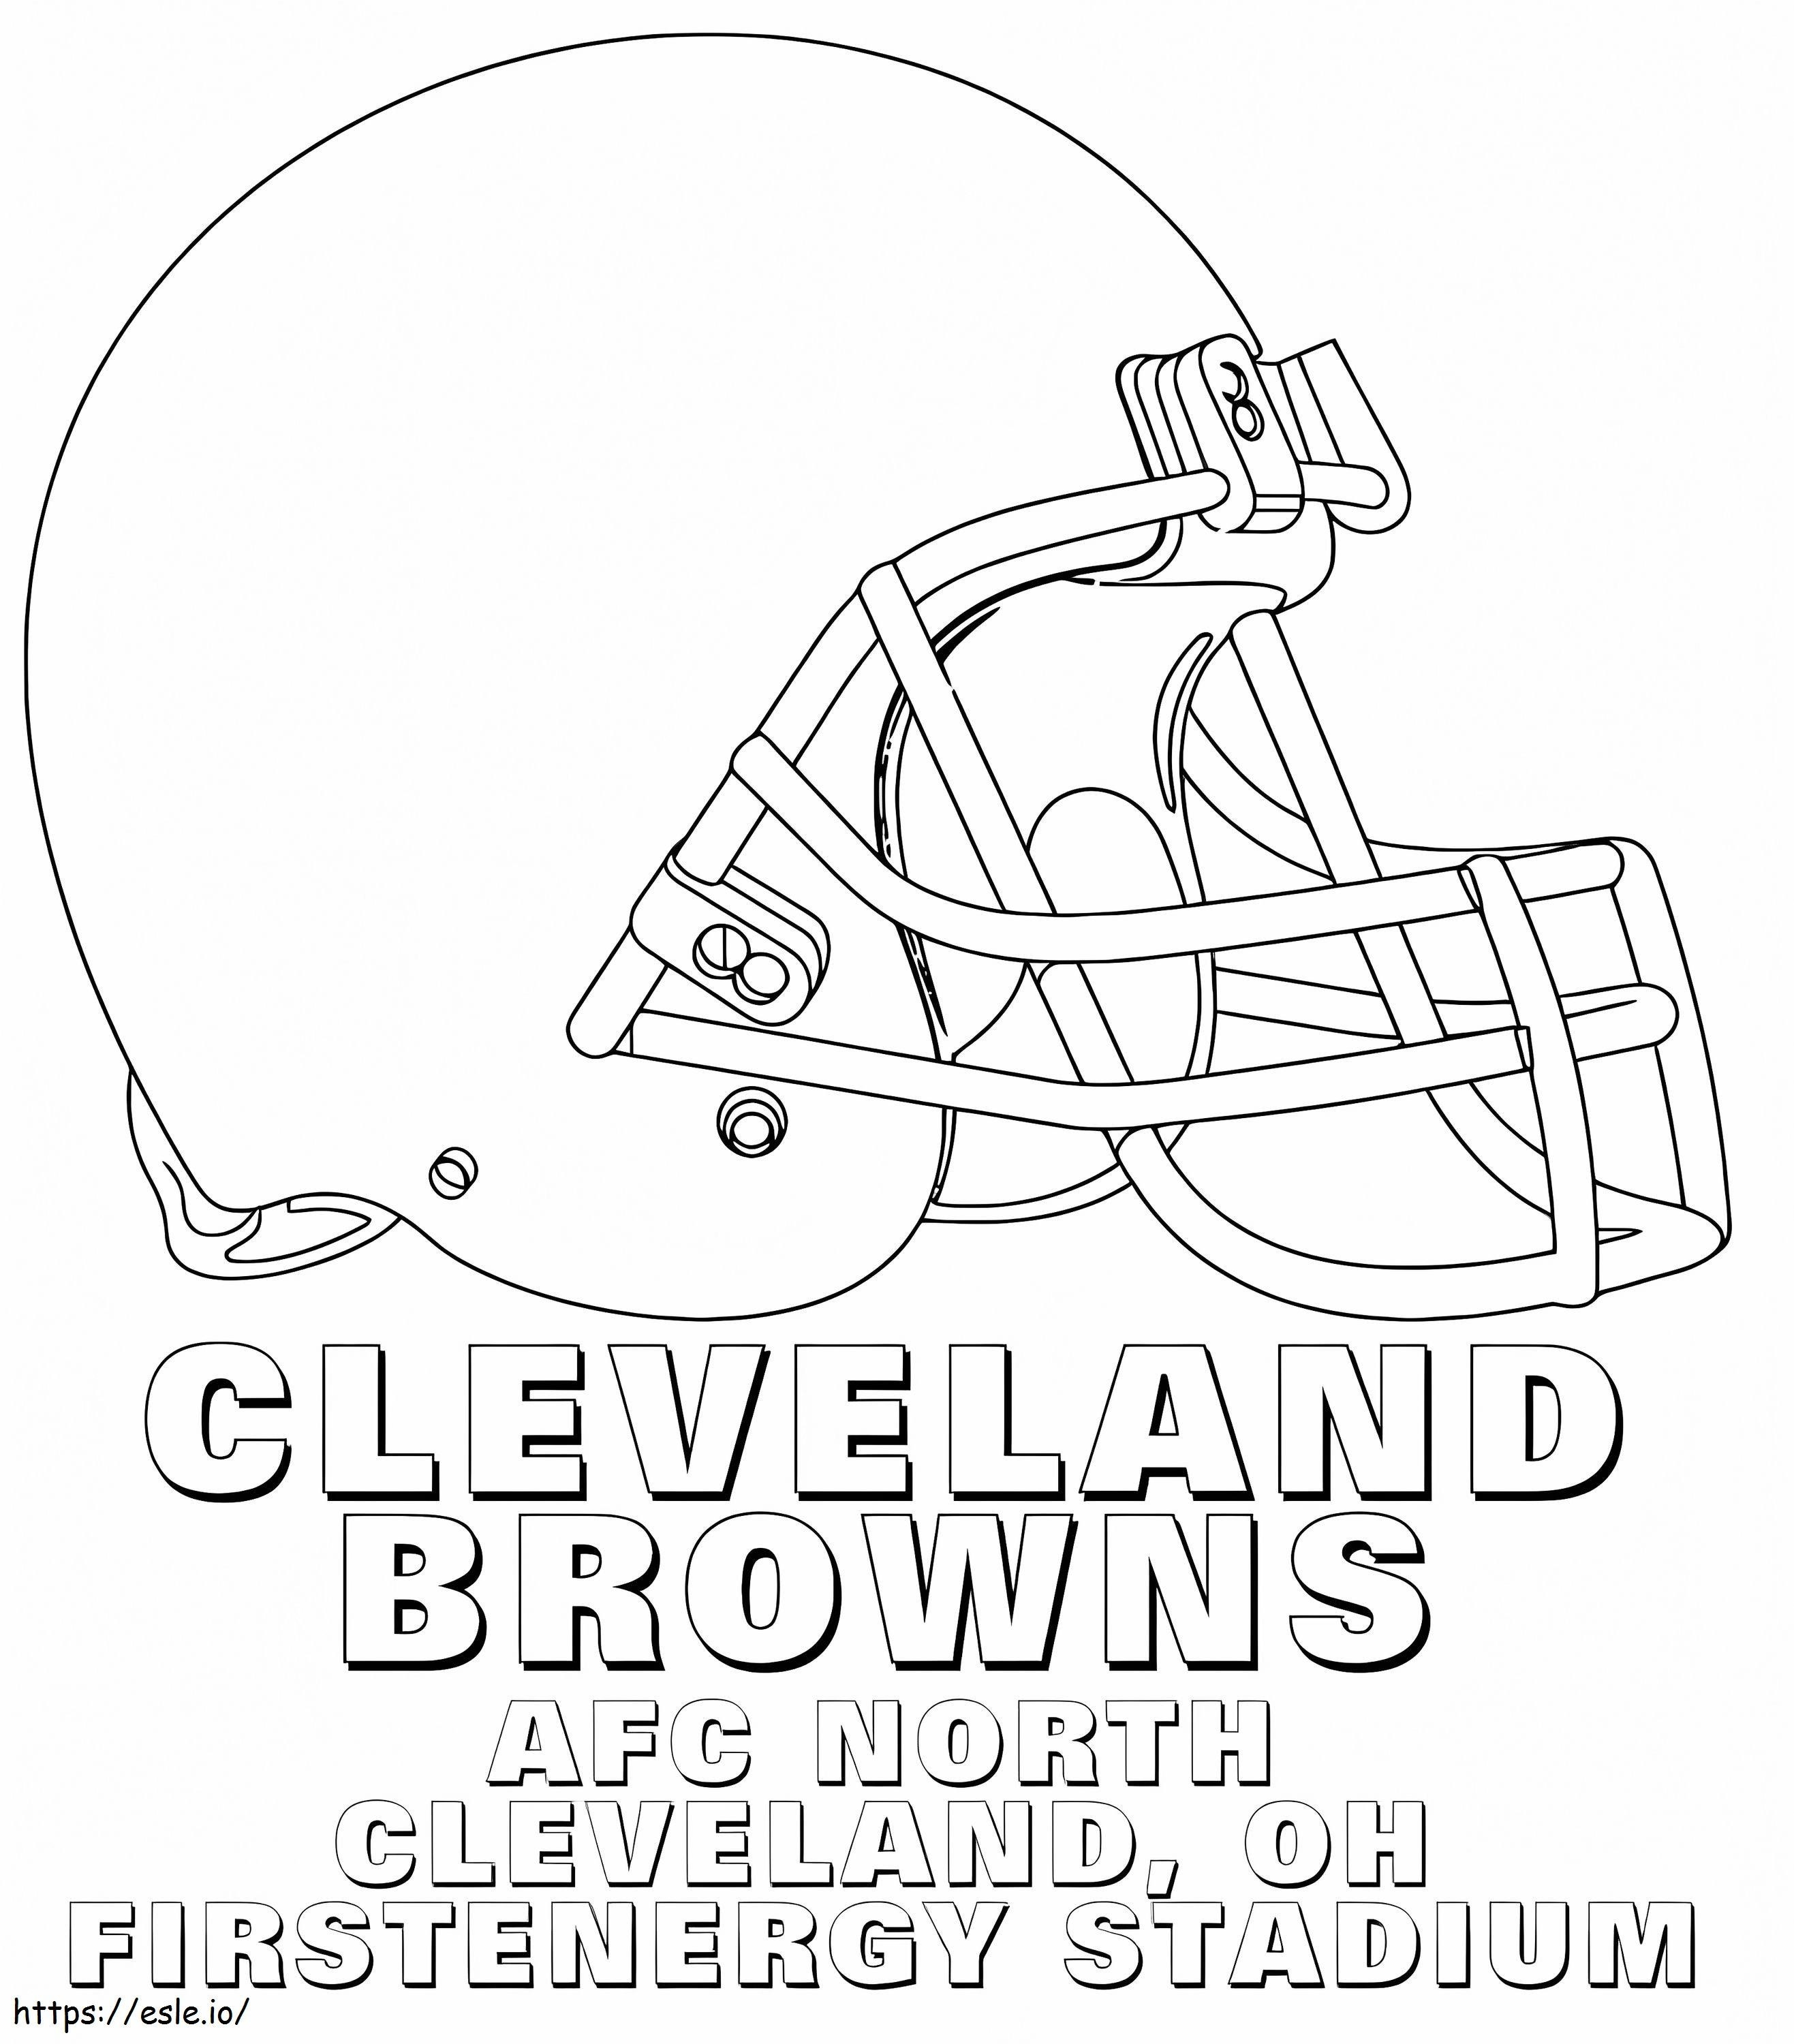 Cleveland Browns2 kleurplaat kleurplaat